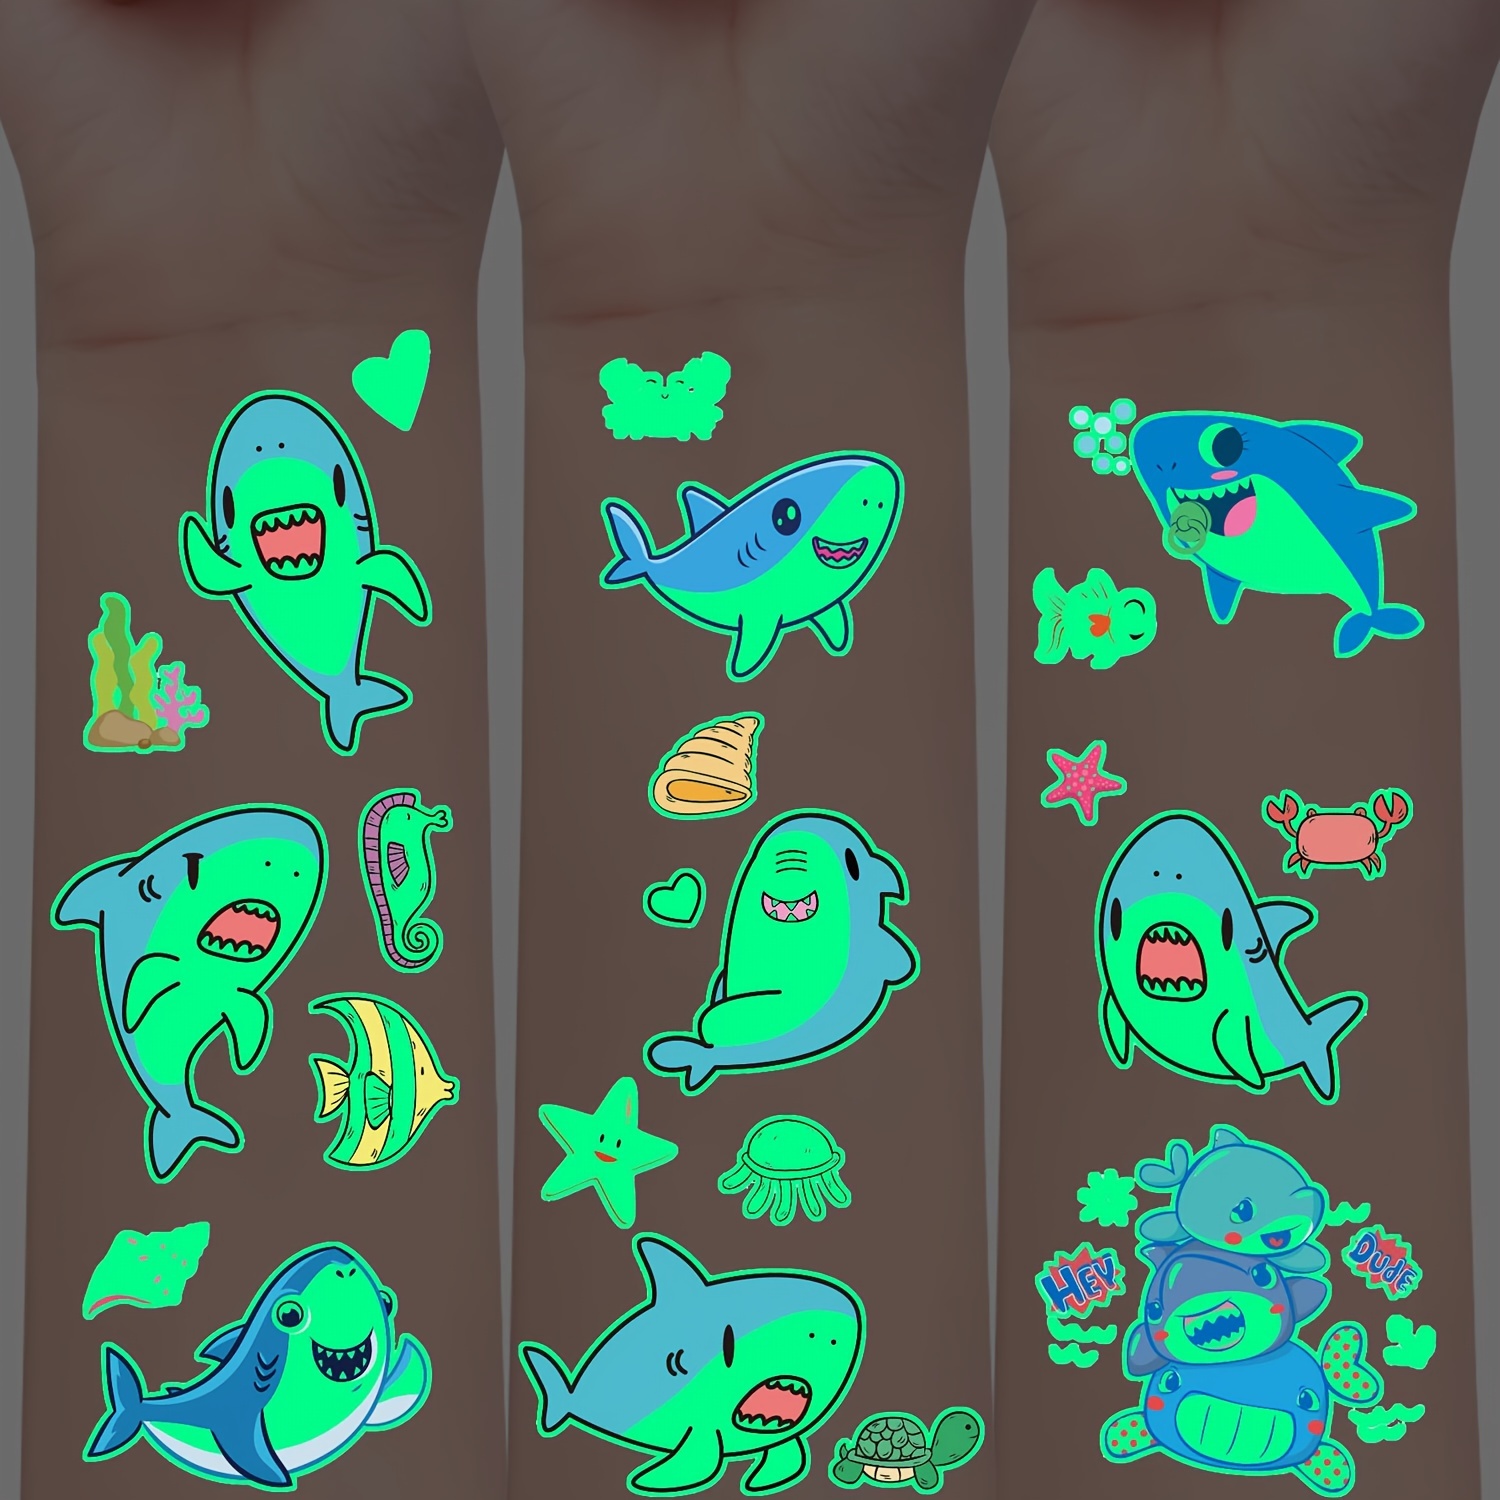 

10 Sheets Glow In The Dark Temporary Tattoos, Shark Series, 120 Cute Cartoon Shark Designs, Easy Apply & Remove, Waterproof & Sweatproof, Lasts 2-5 Days, Fun Luminous Tattoo Stickers